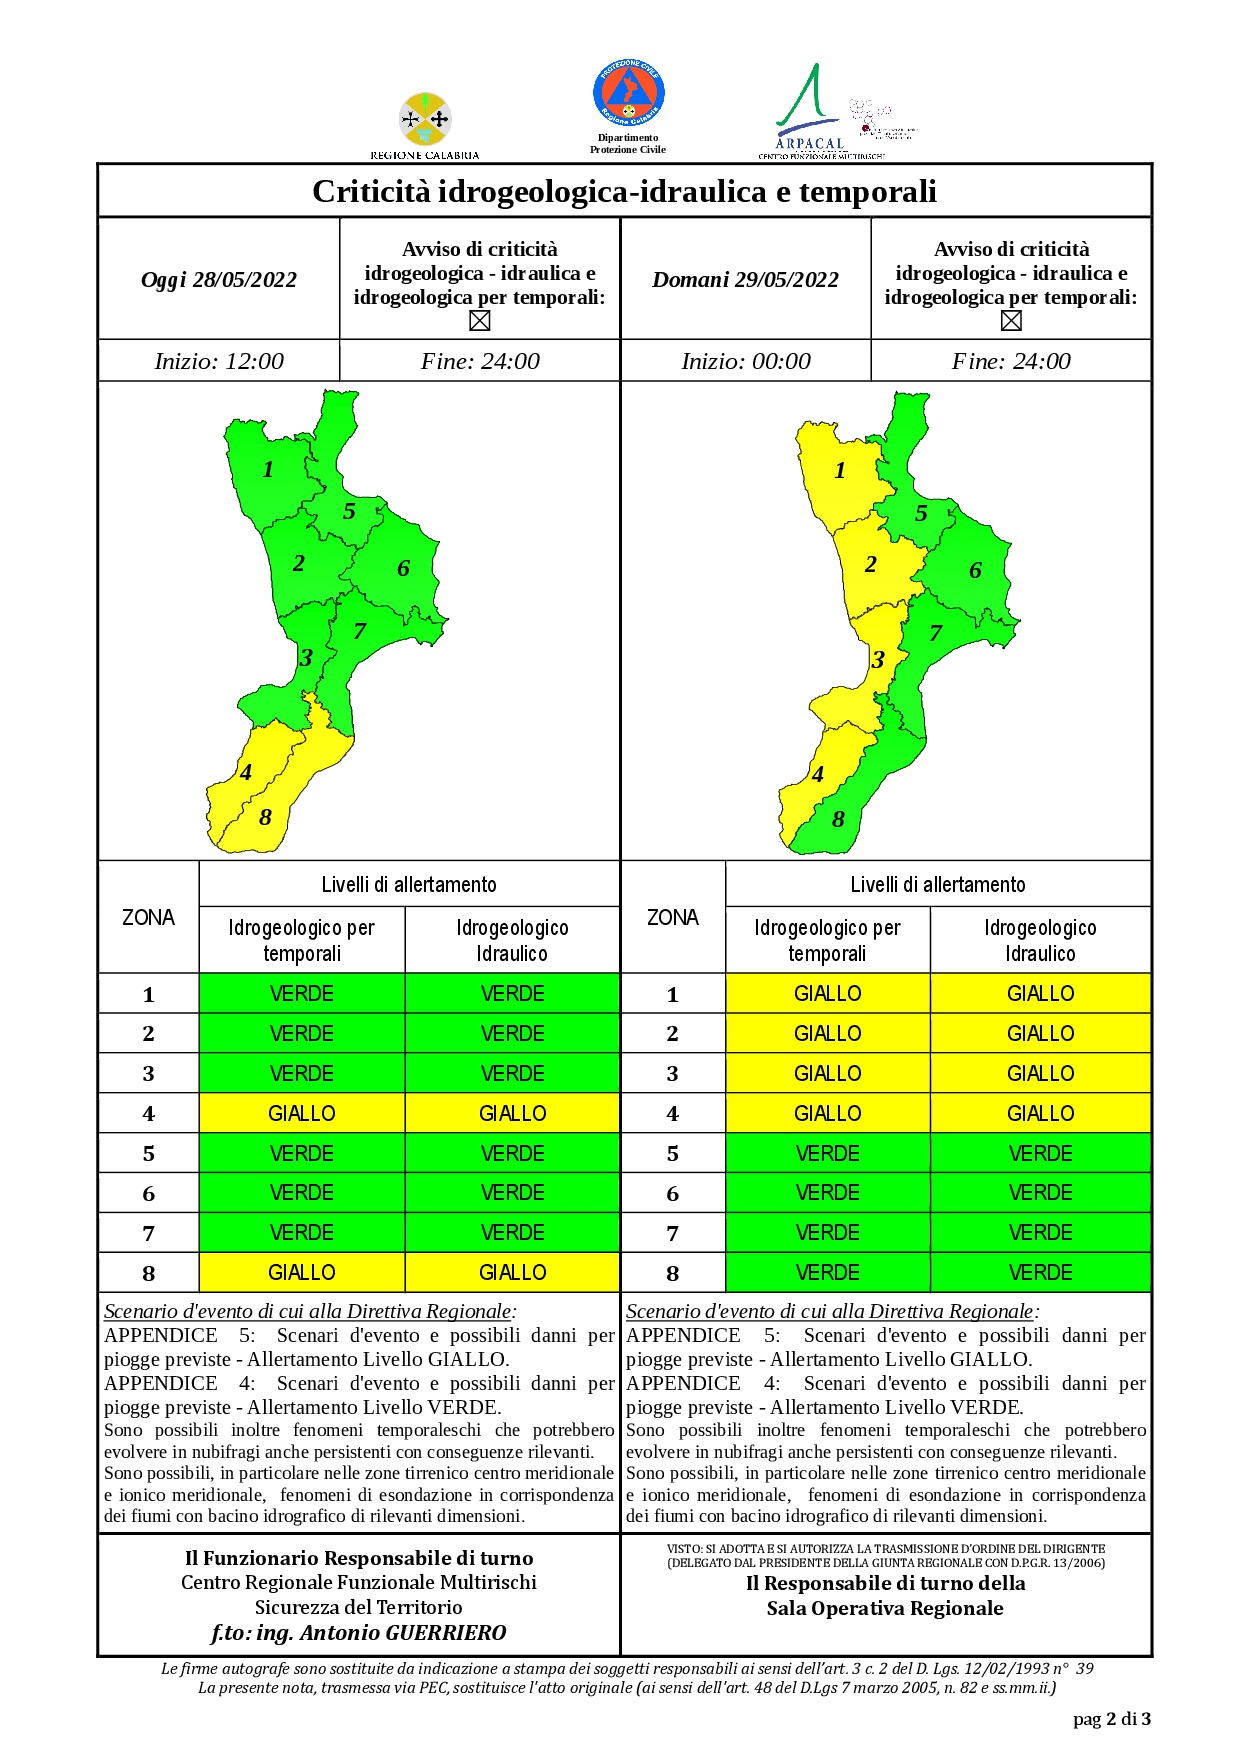 Criticità idrogeologica-idraulica e temporali in Calabria 28-05-2022